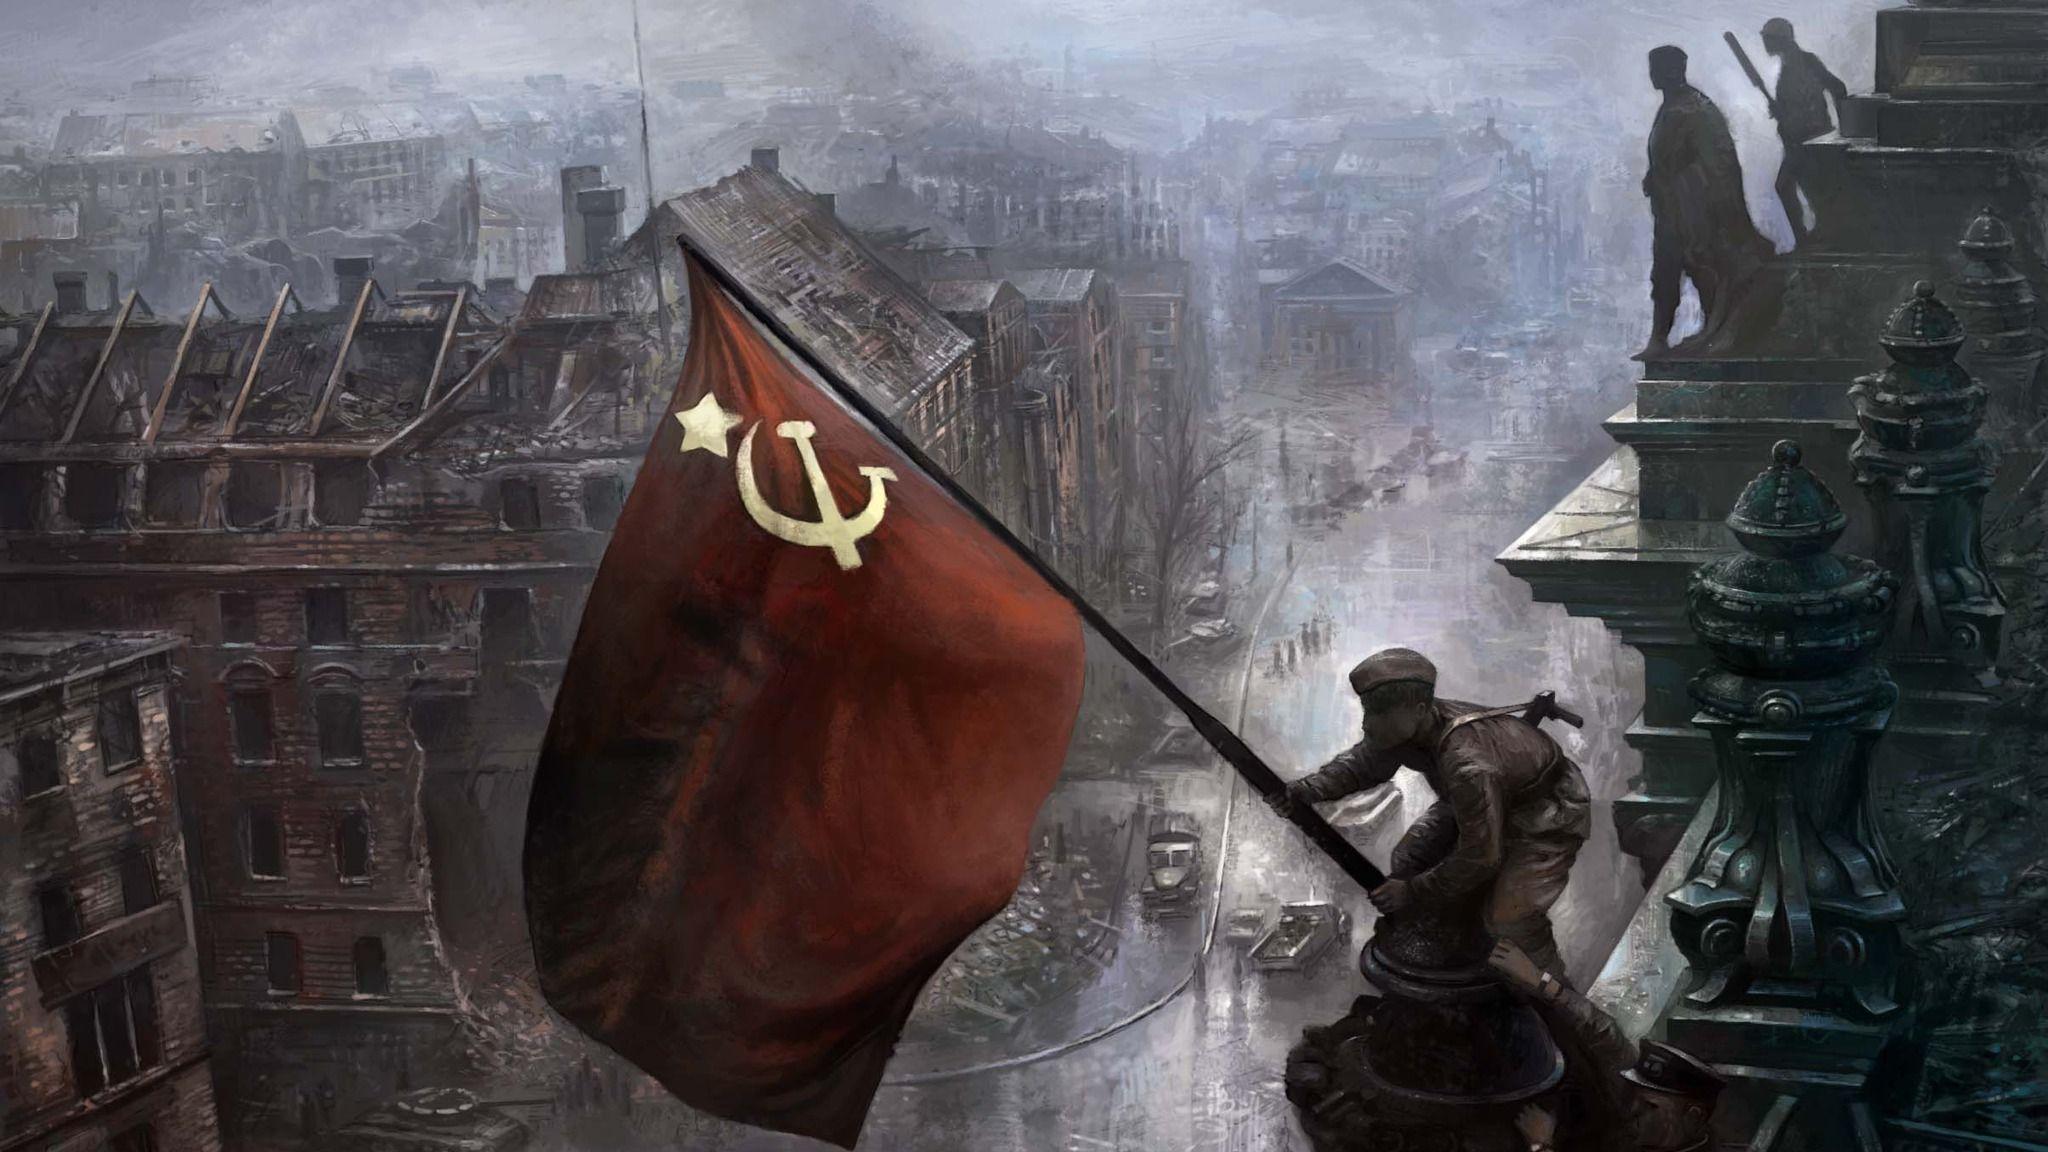 Ussr Flag Wallpaper Soviet union w. Soviet Union